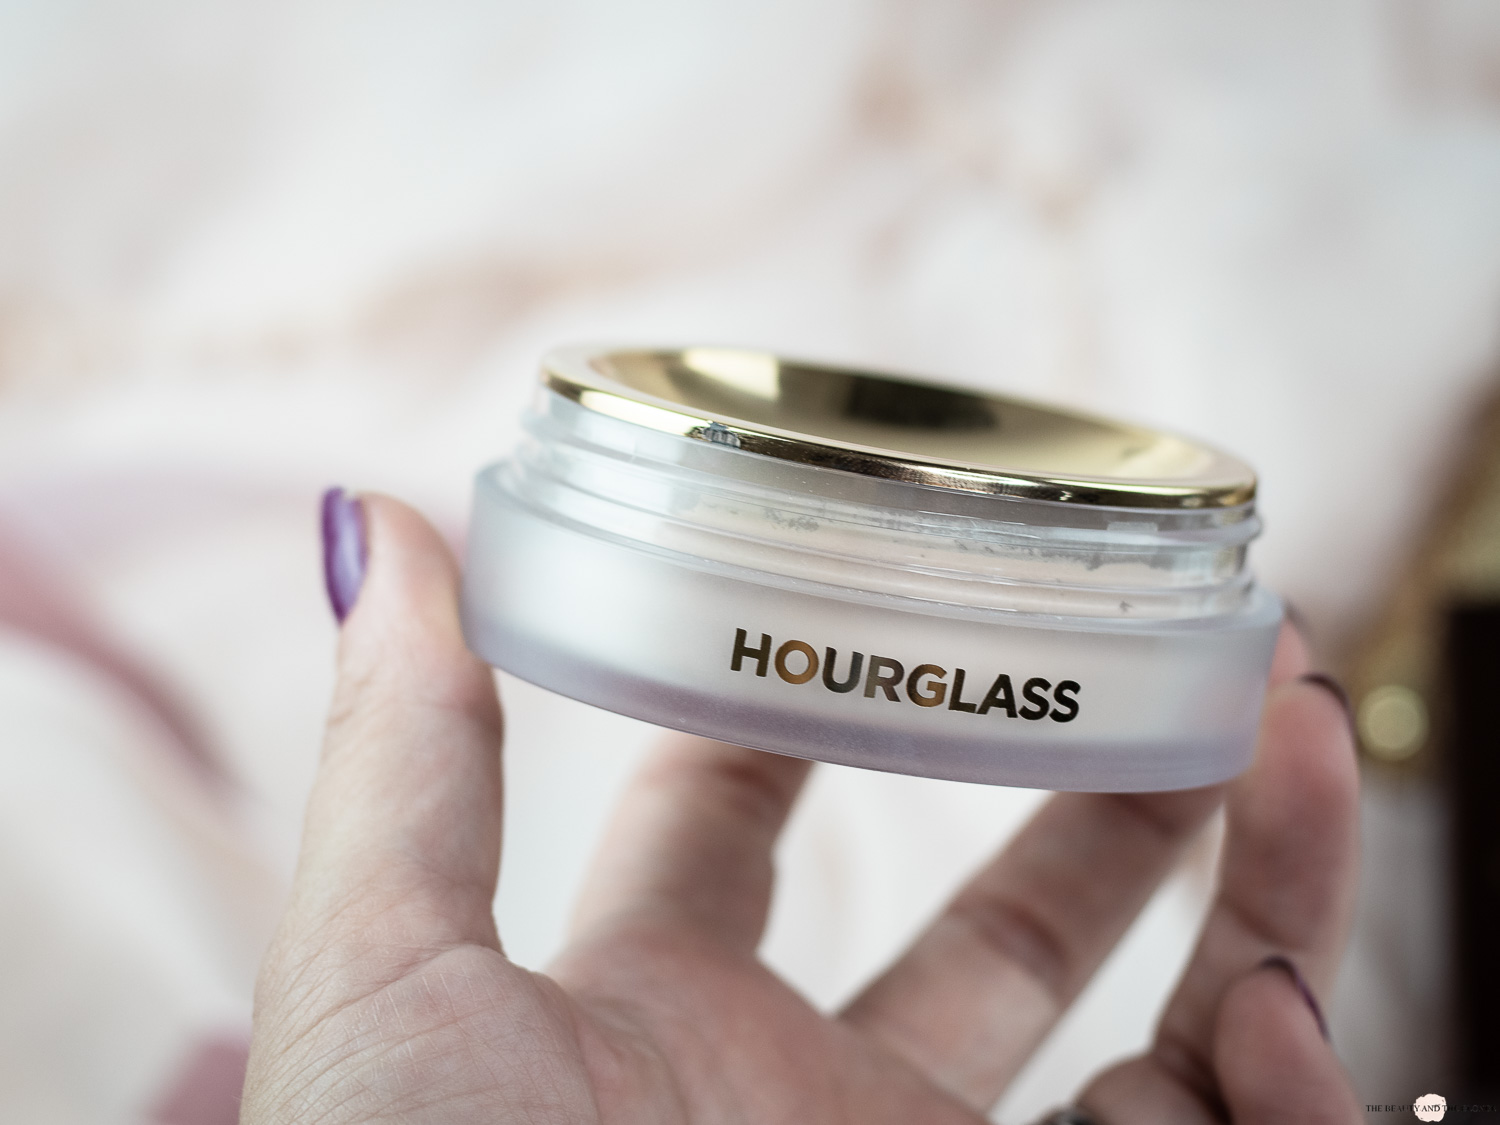 Hourglass Veil Translucent Setting Powder Puder Review Highend Makeup